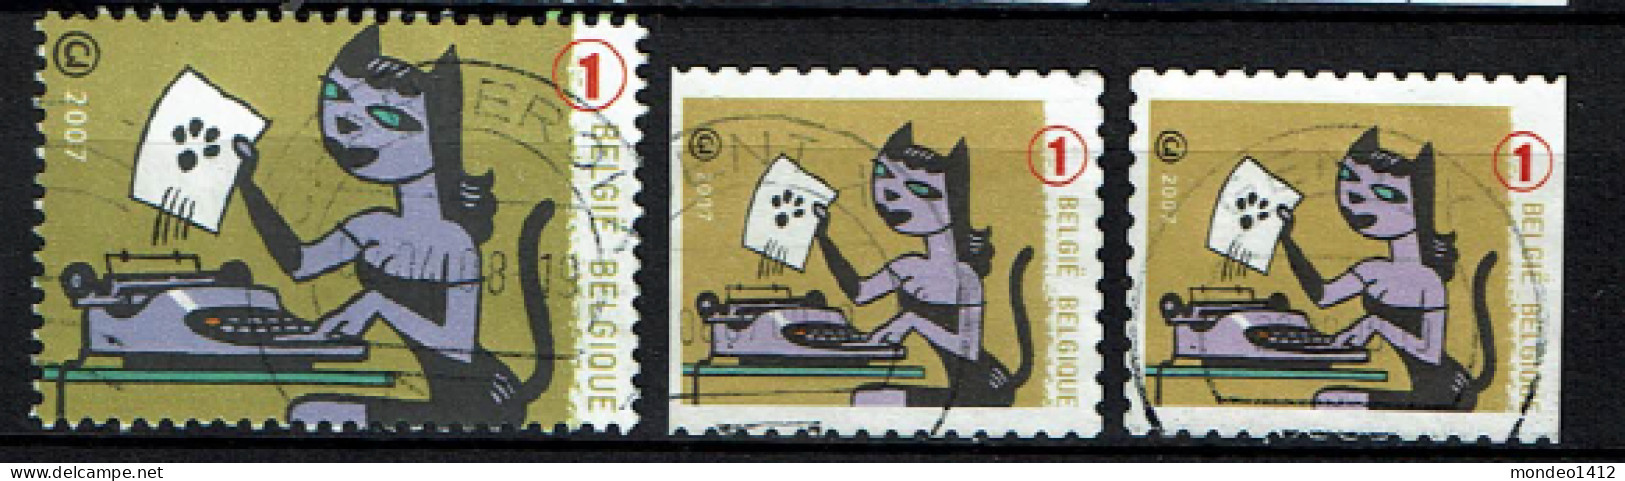 België OBP 3713,3717 - Schrijfmachines, Les Machines à écrire, Typewriters - Olivetti - Gebraucht